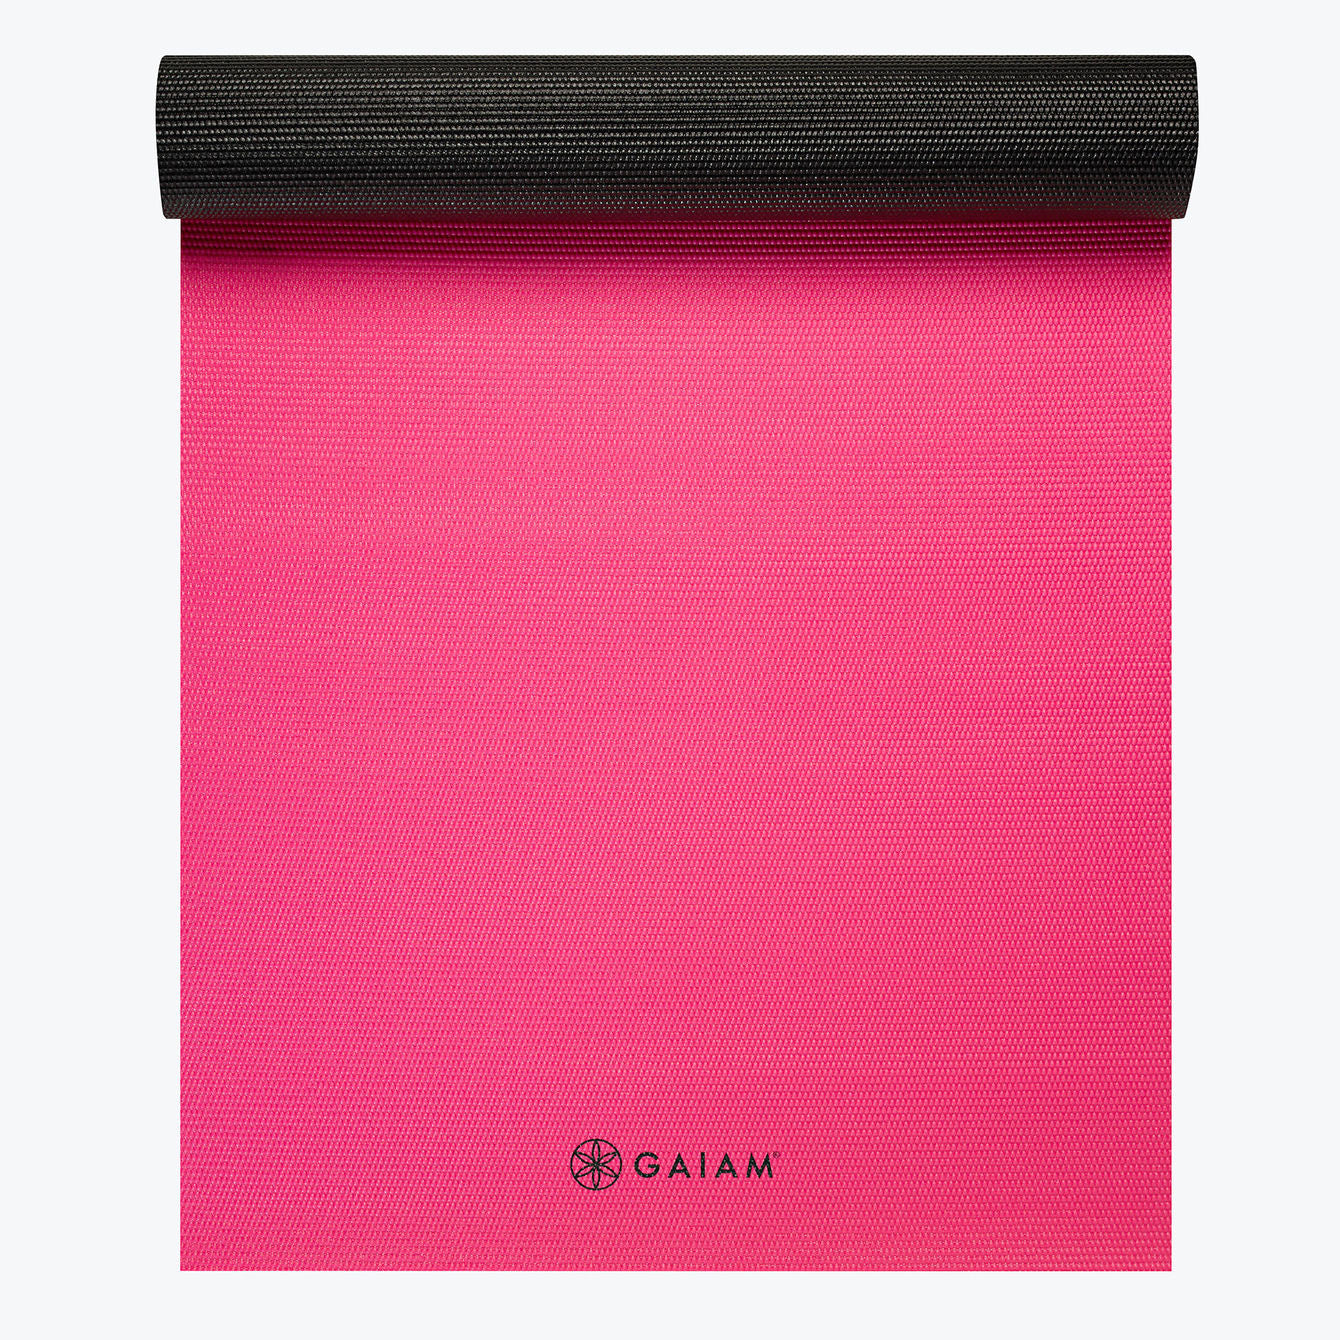 Gaiam Premium 2-Color Yoga Mat, Granite Storm, 5mm 